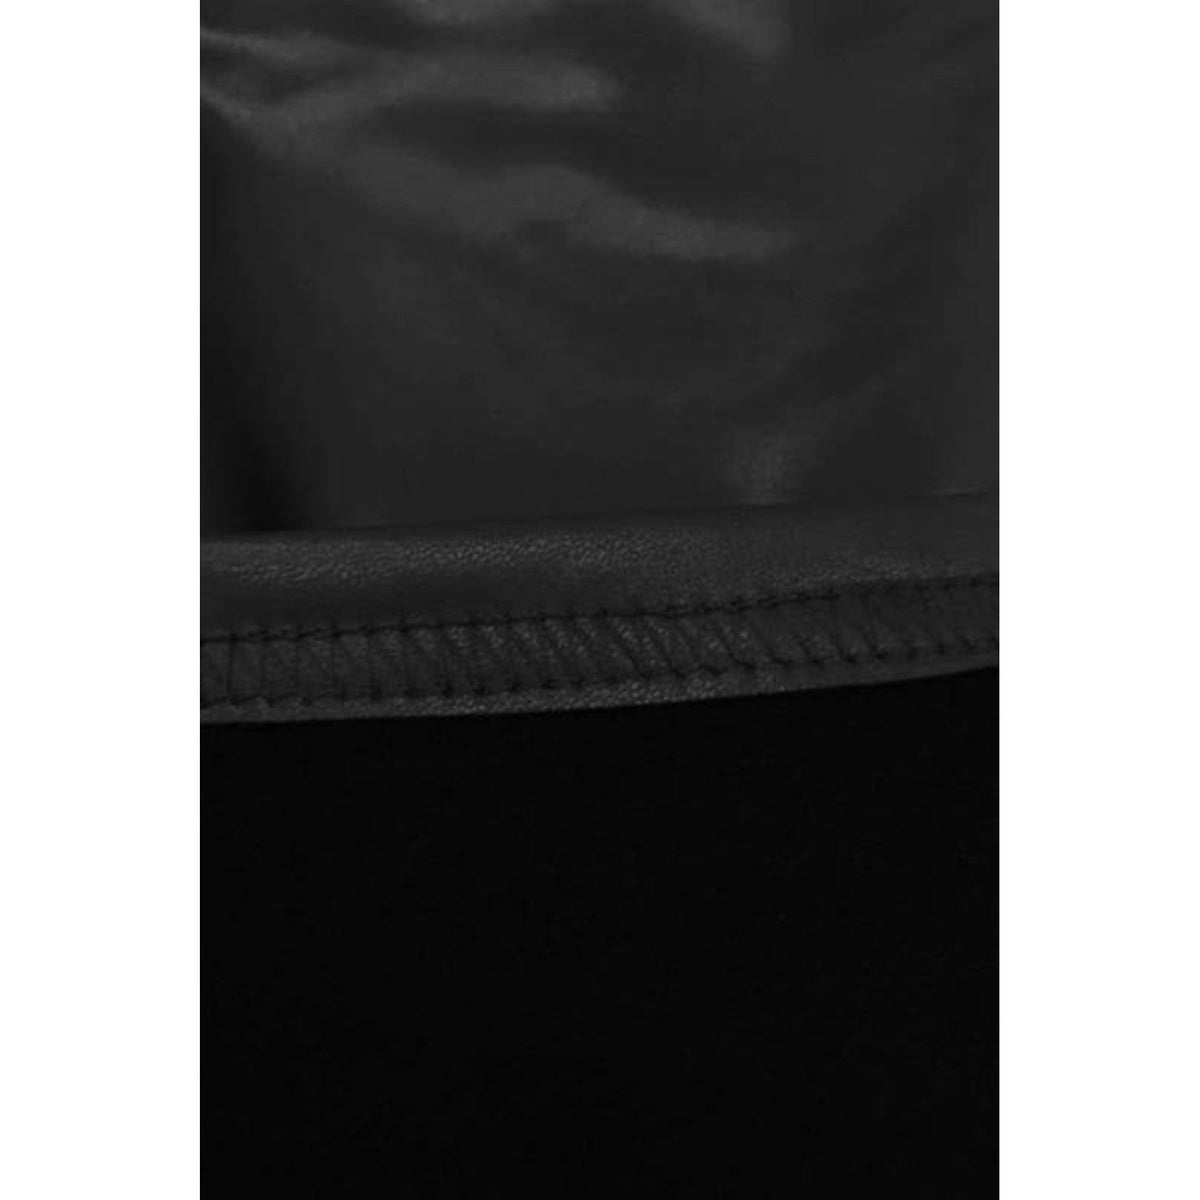 Black fleece lined faux leather legging; womens apparel.